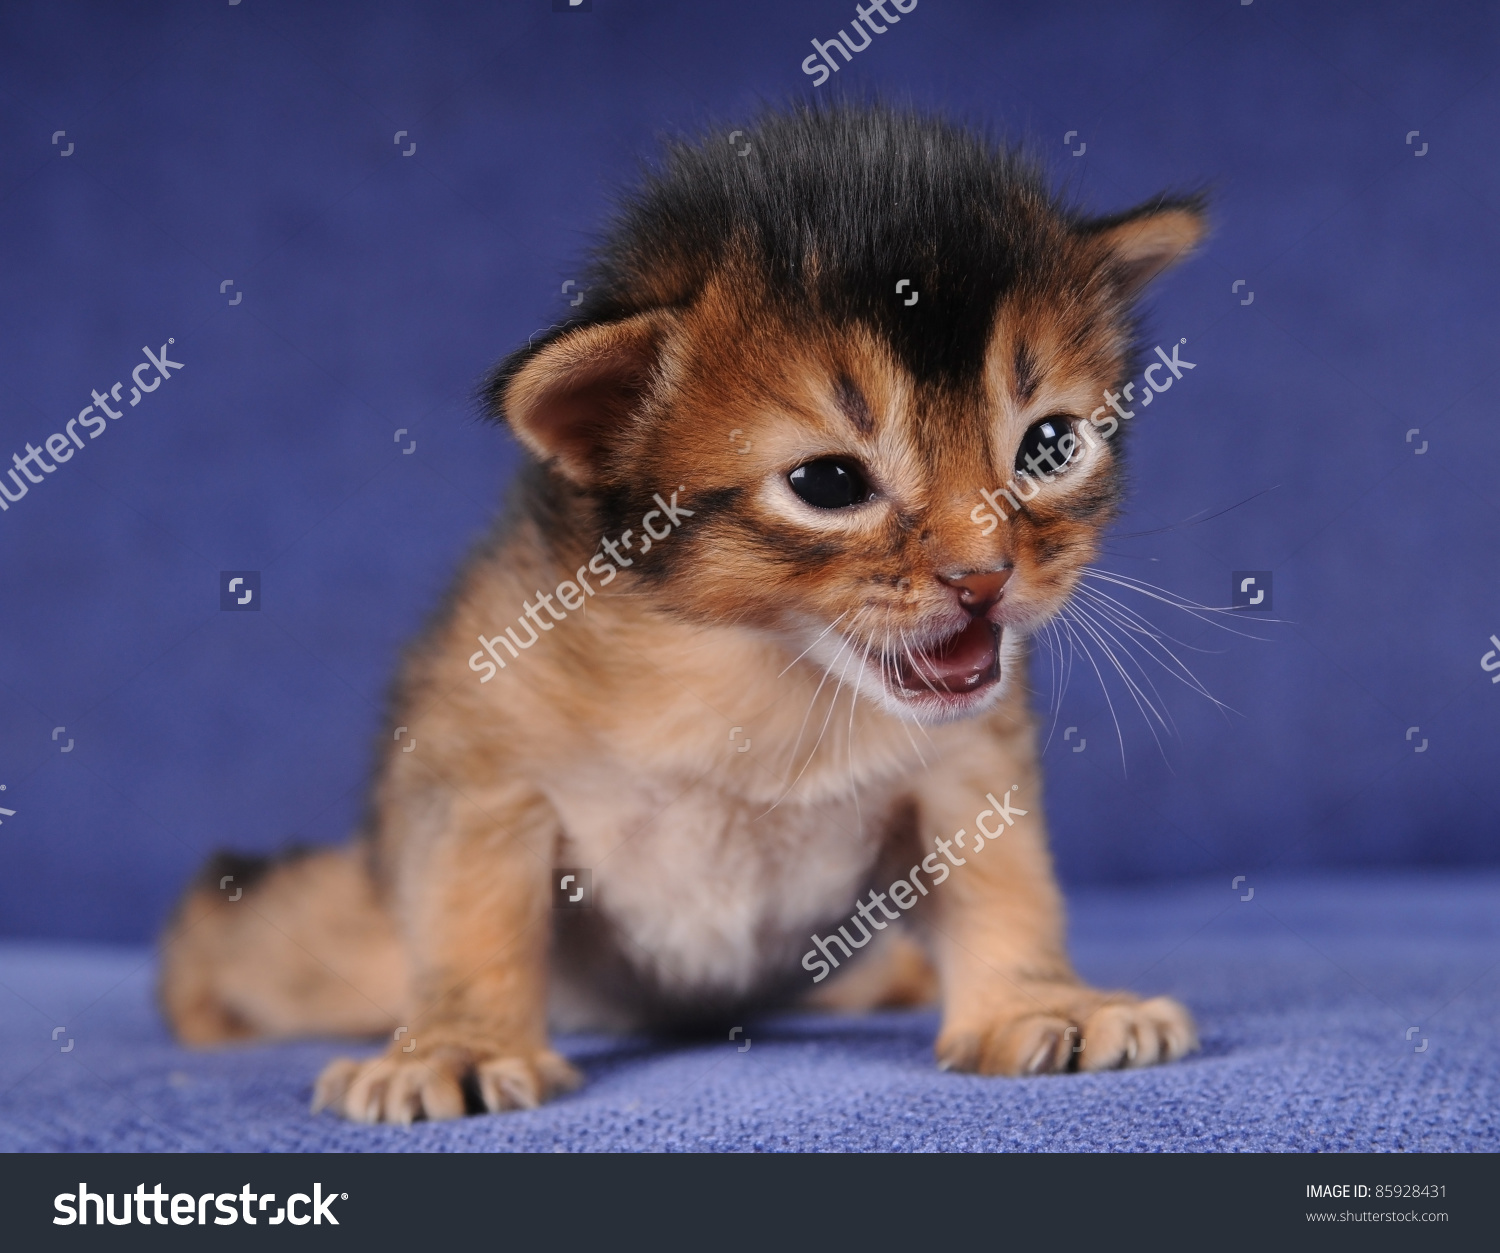 Little New Born Somali Kitten